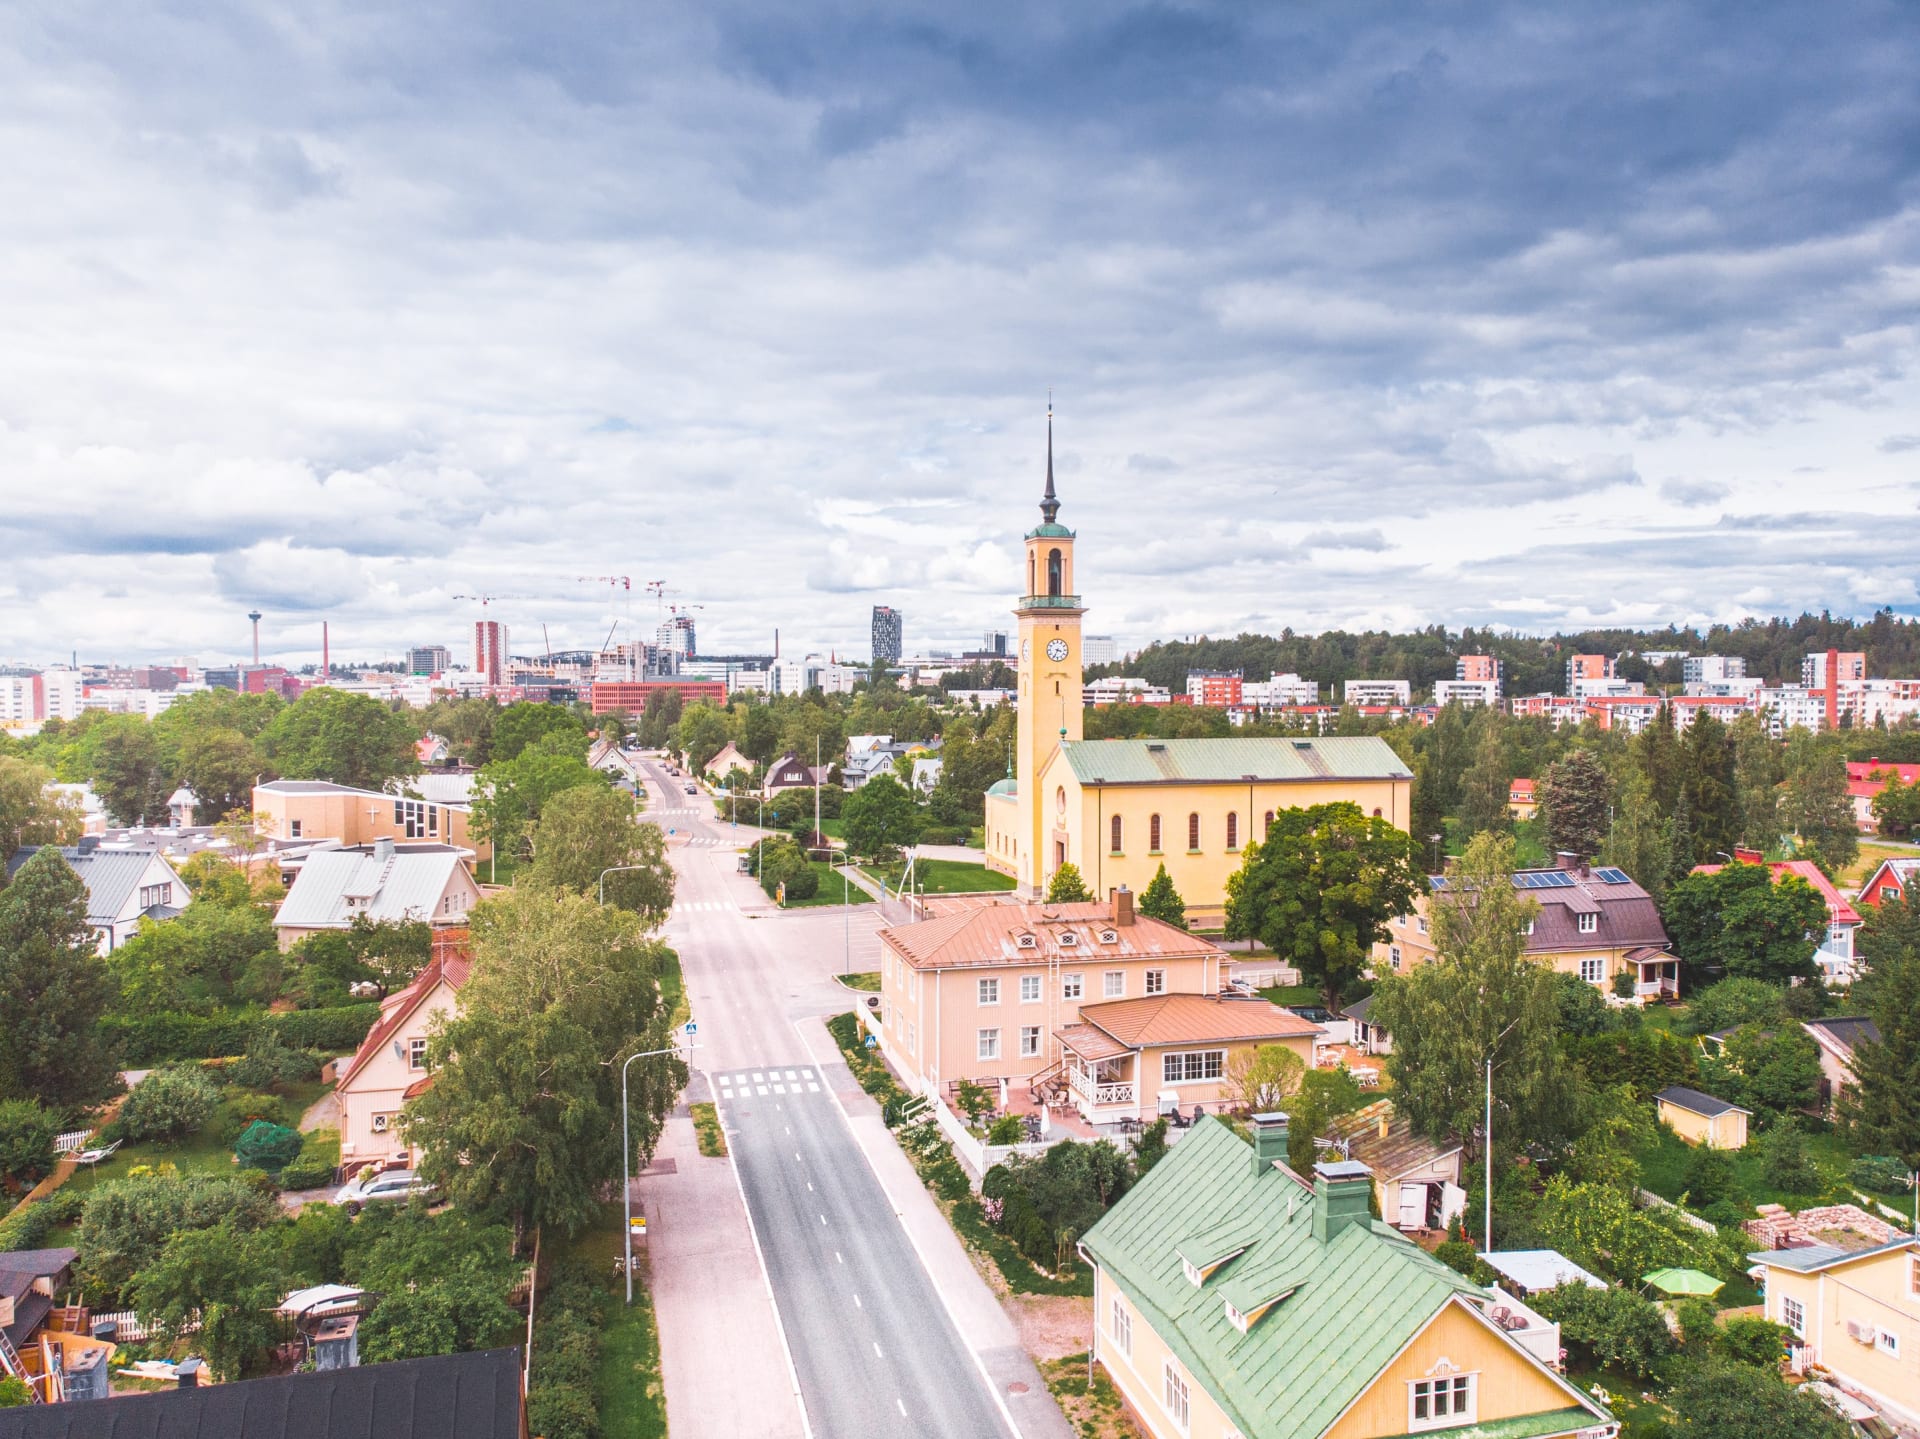 Aerial photo of Viinikka skyline with Viinikka Church bell tower